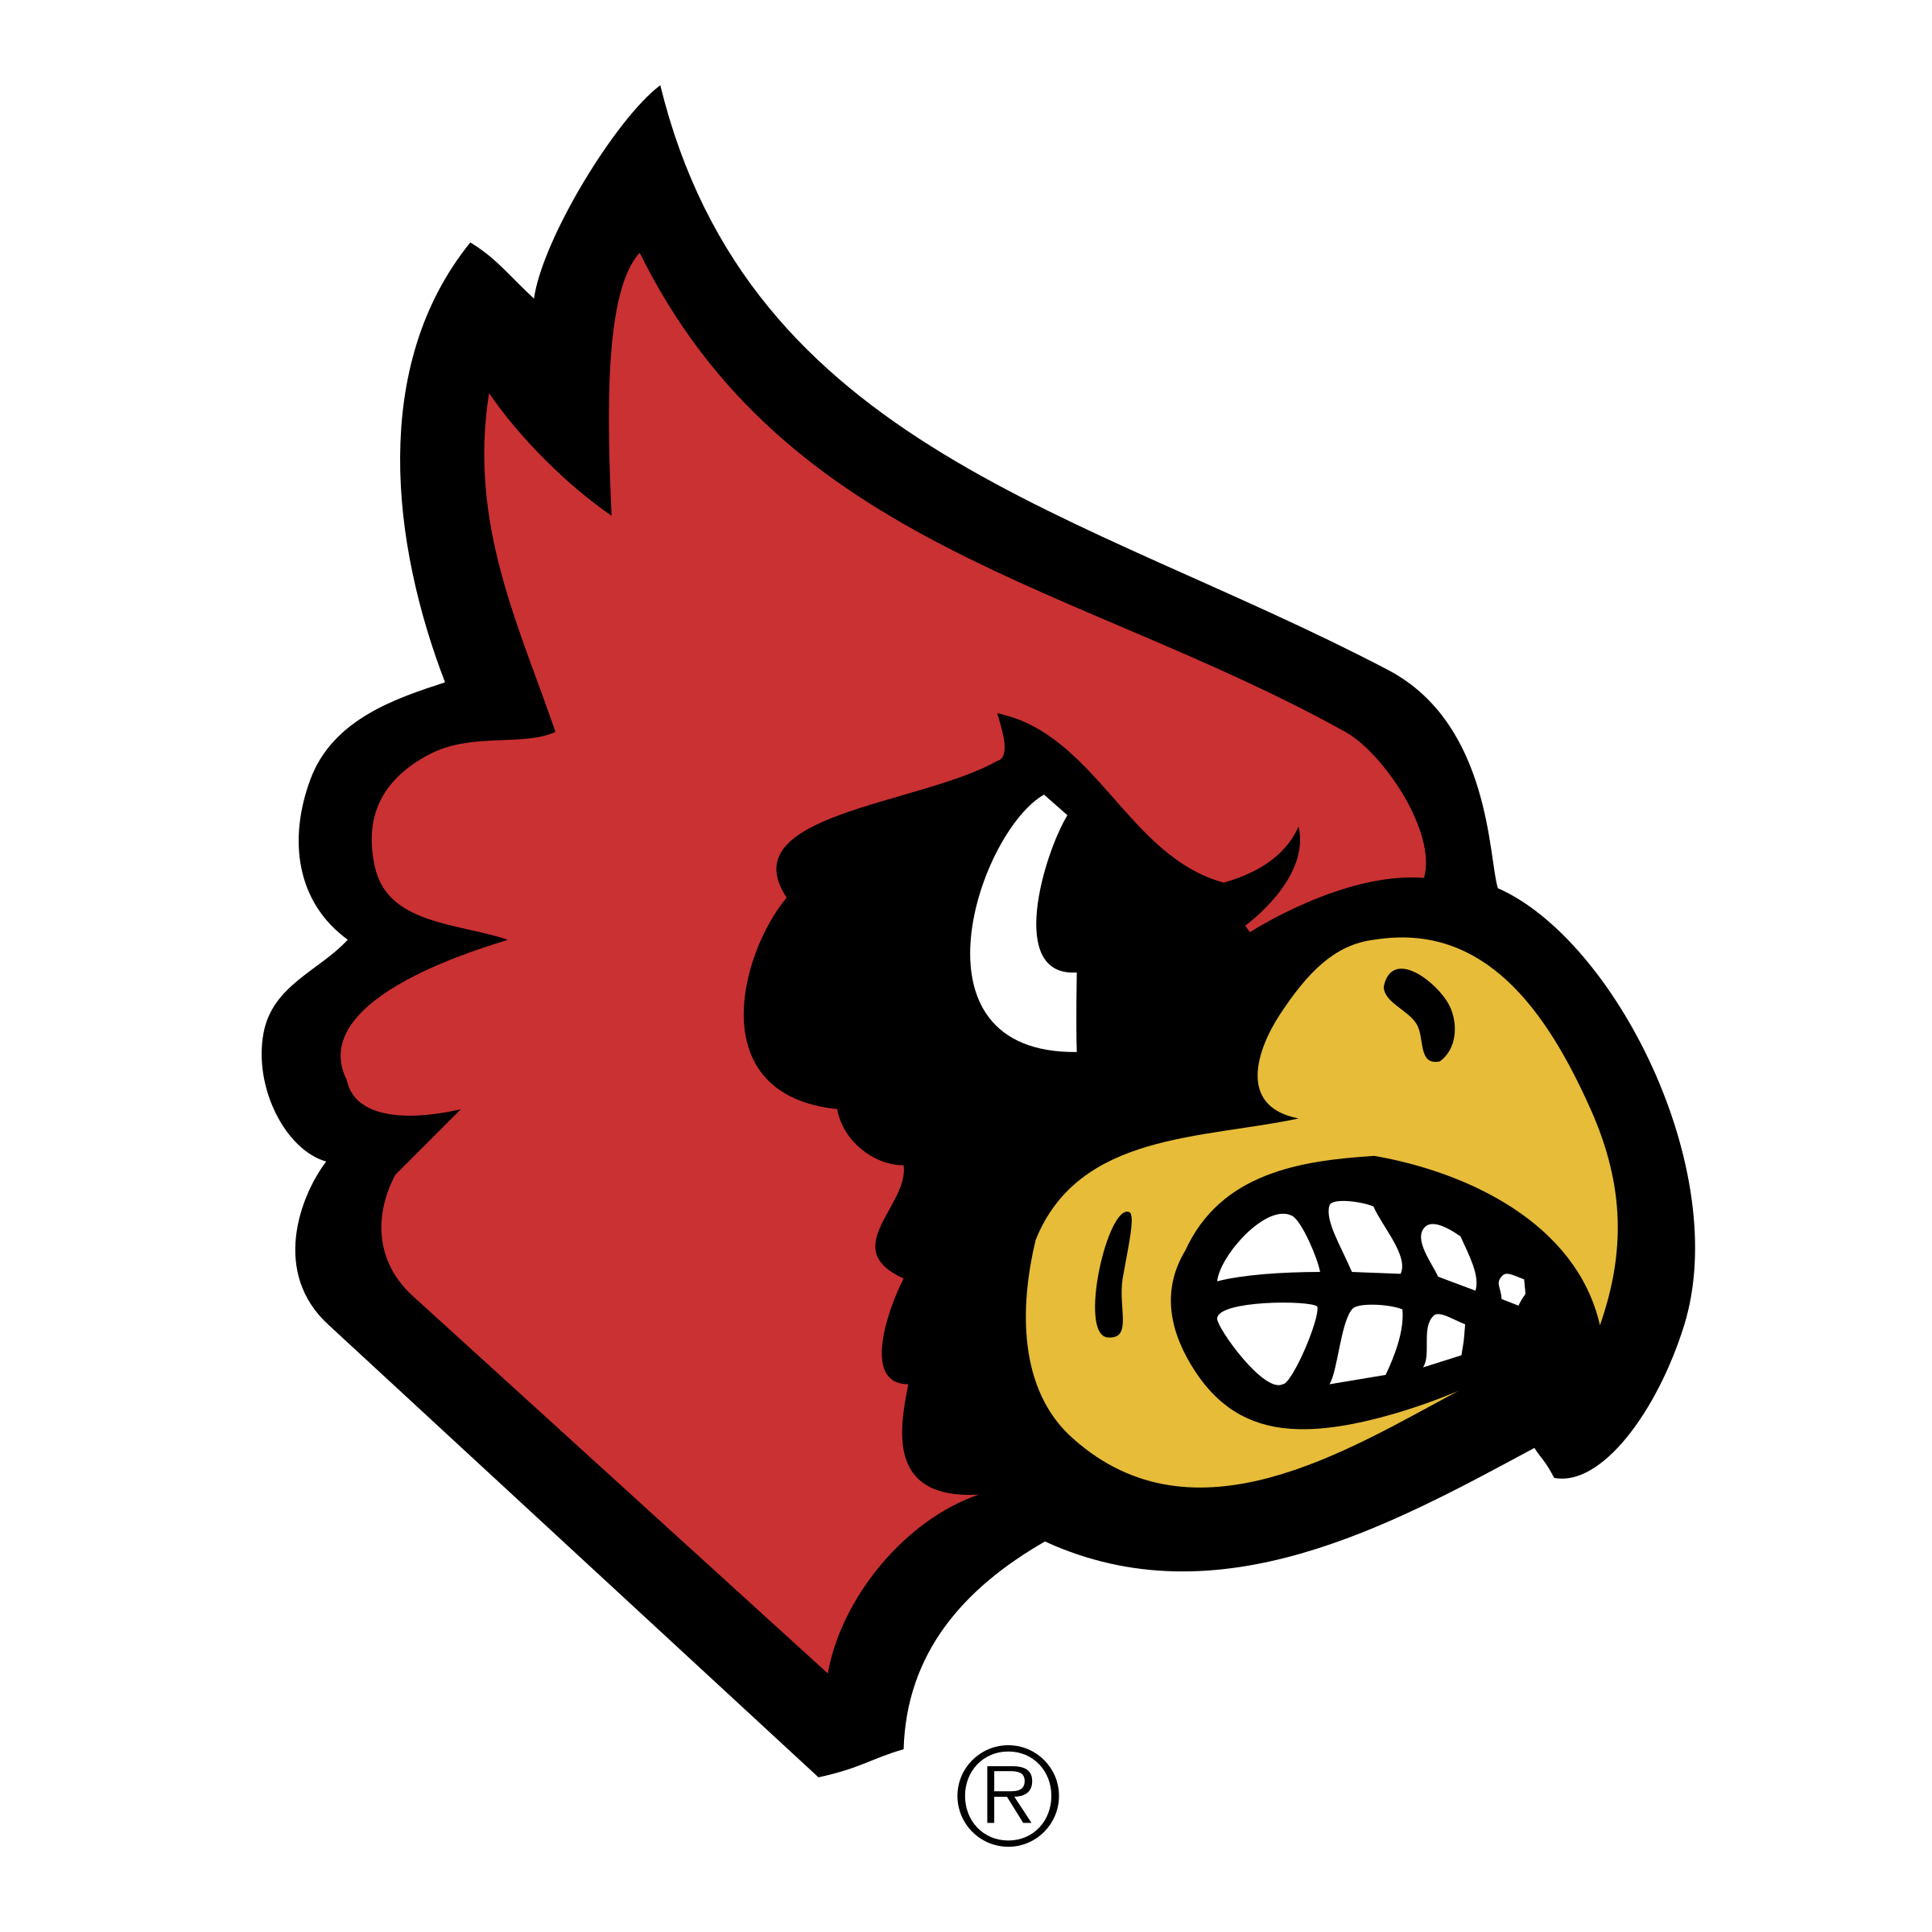 U of L Cardinal Logo - Louisville Cardinals Logo PNG Transparent & SVG Vector - Freebie Supply